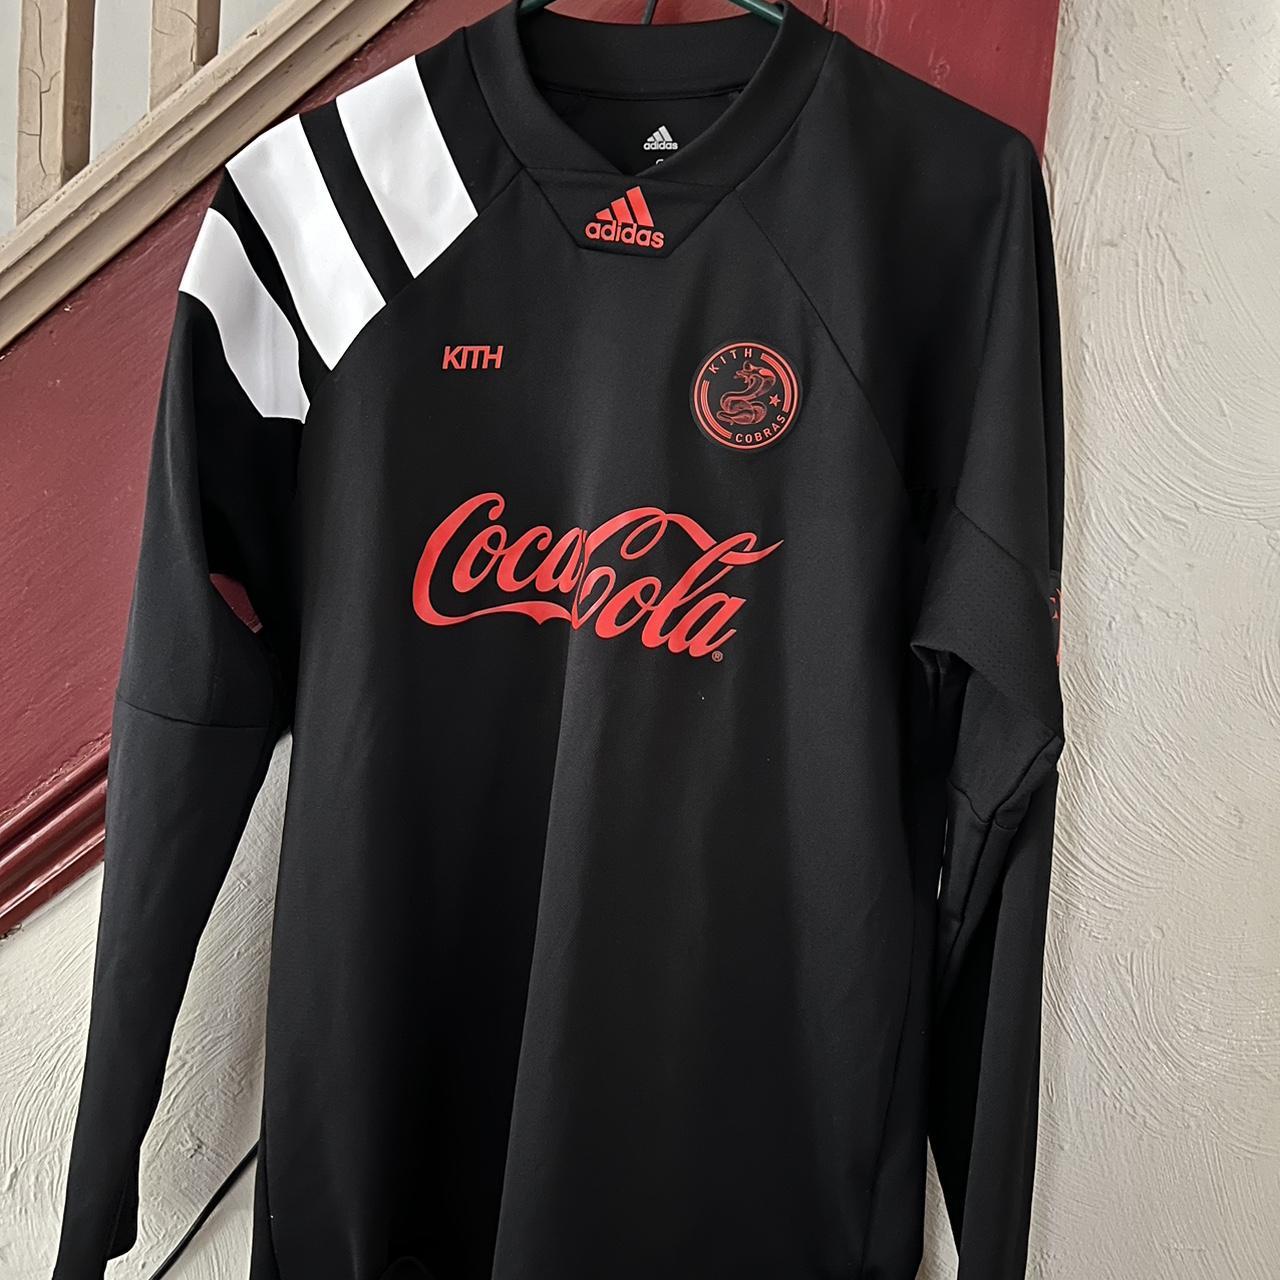 Kith cobras x Coca-Cola Adidas black soccer jersey.